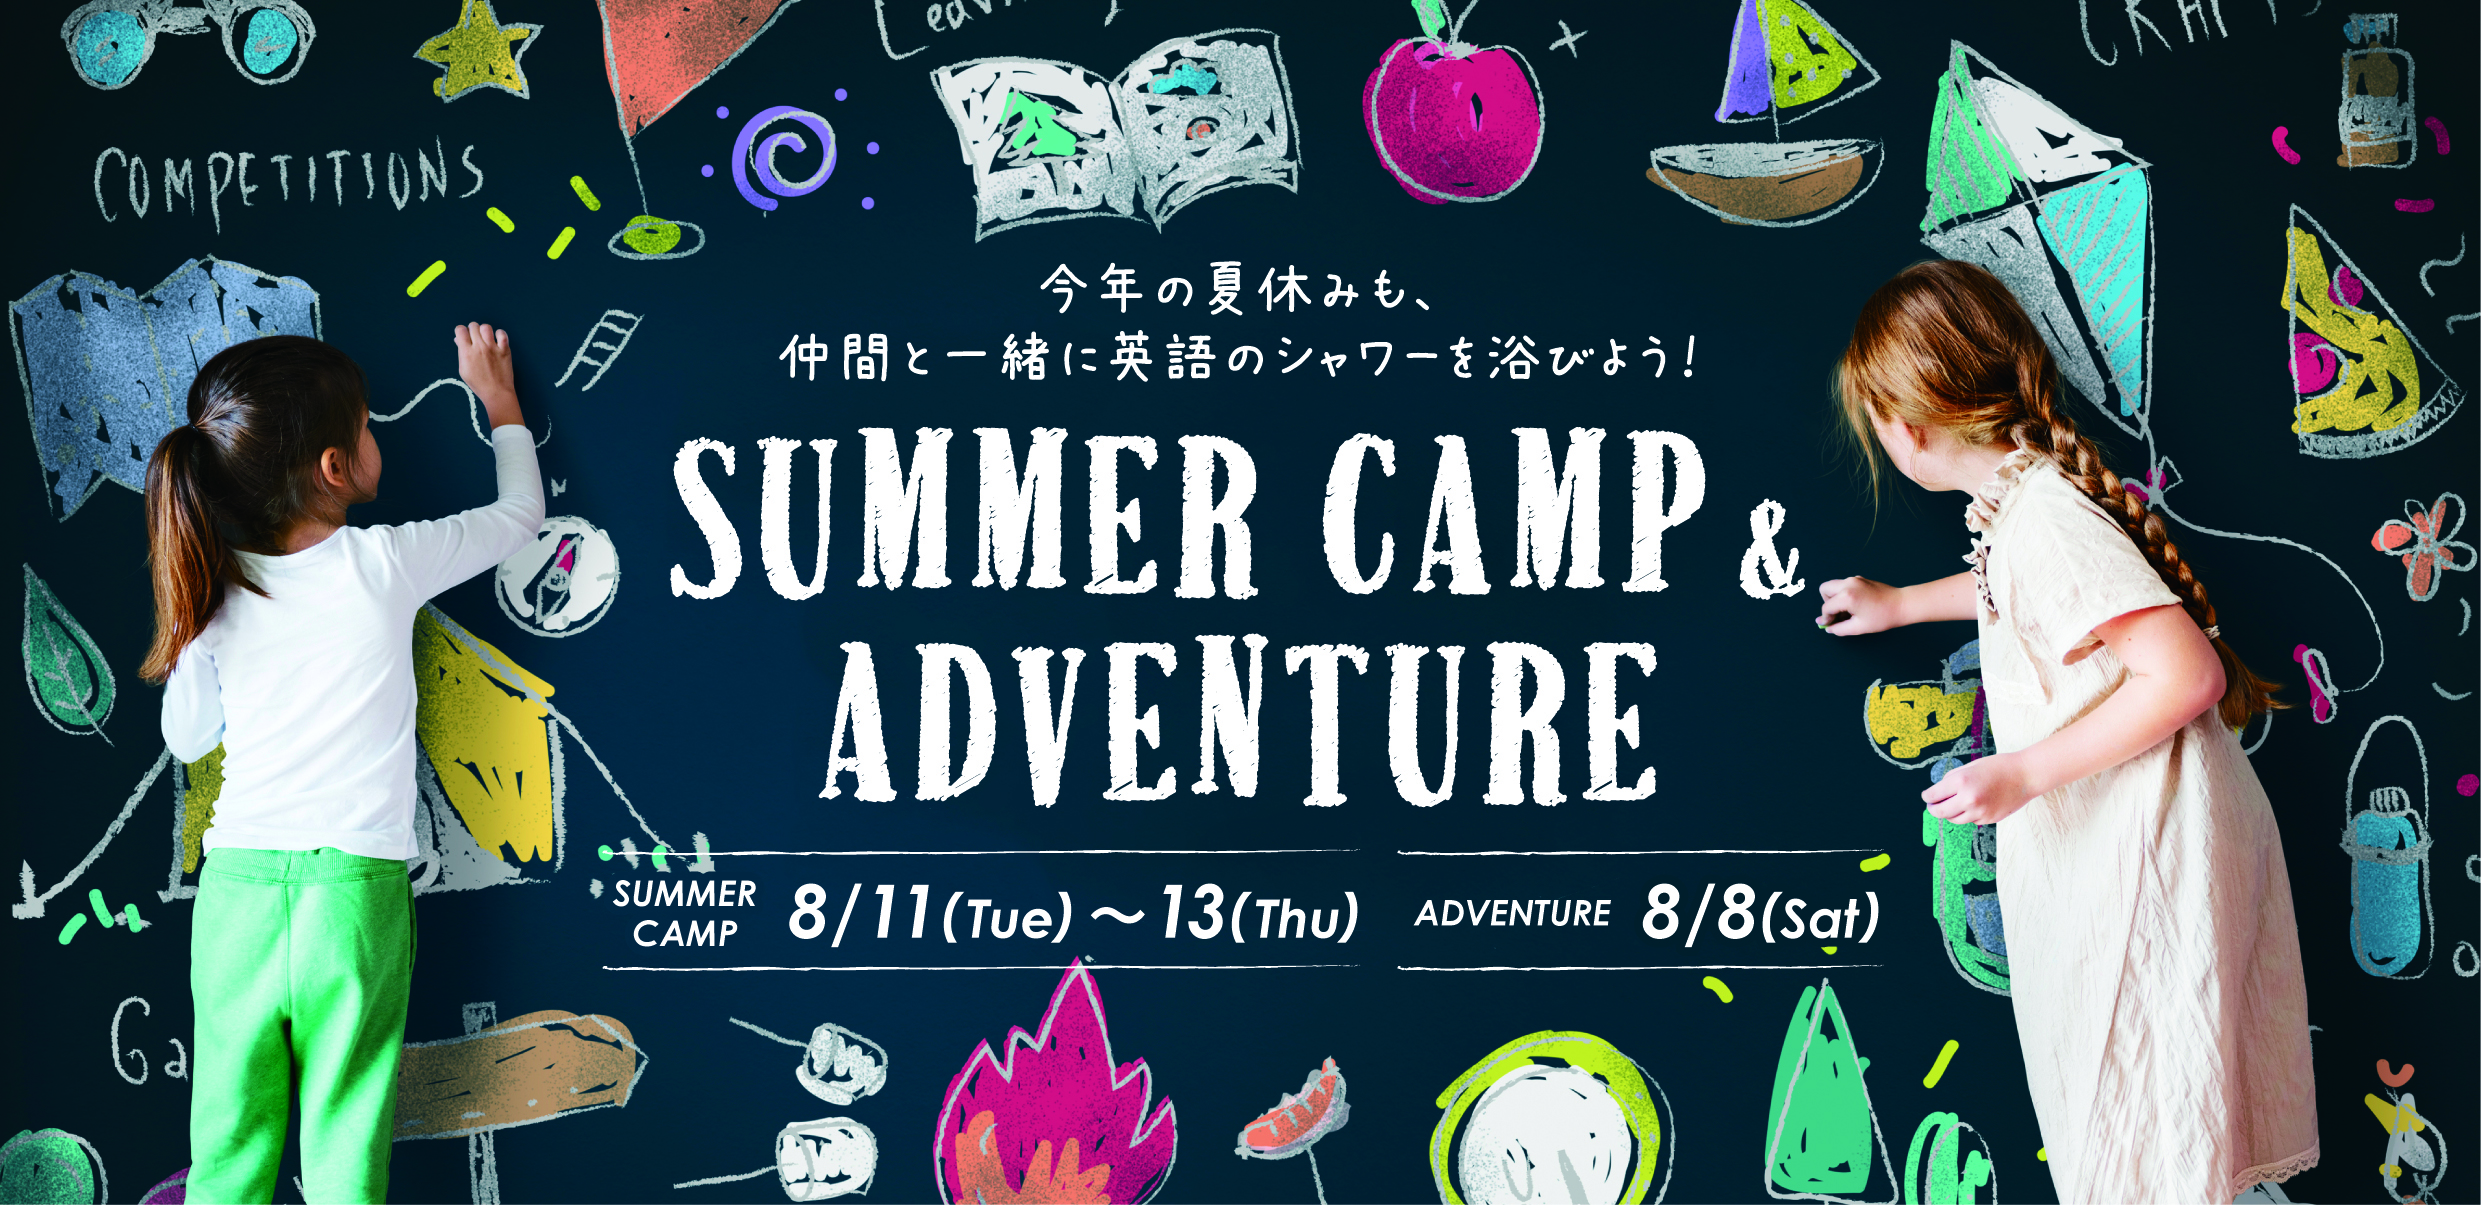 NESTON Summer Camp & Adventure 2020